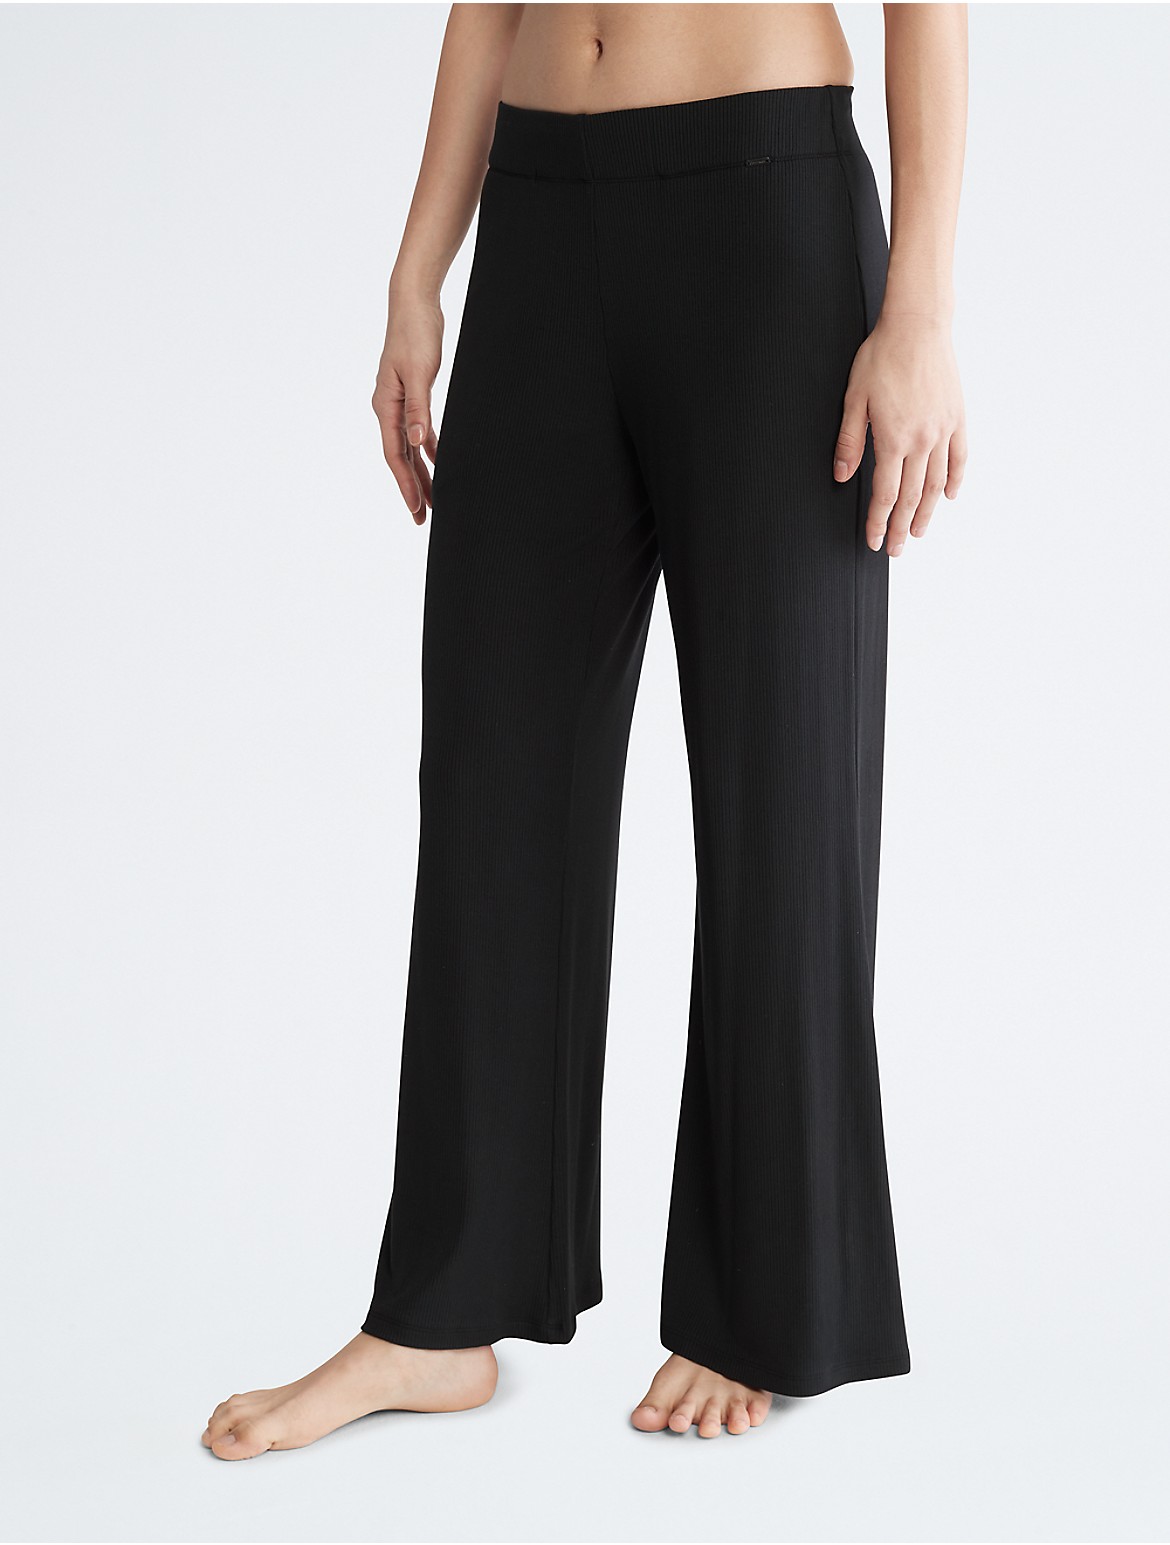 Calvin Klein Women's Sophisticated Lounge Sleep Pants - Black - S